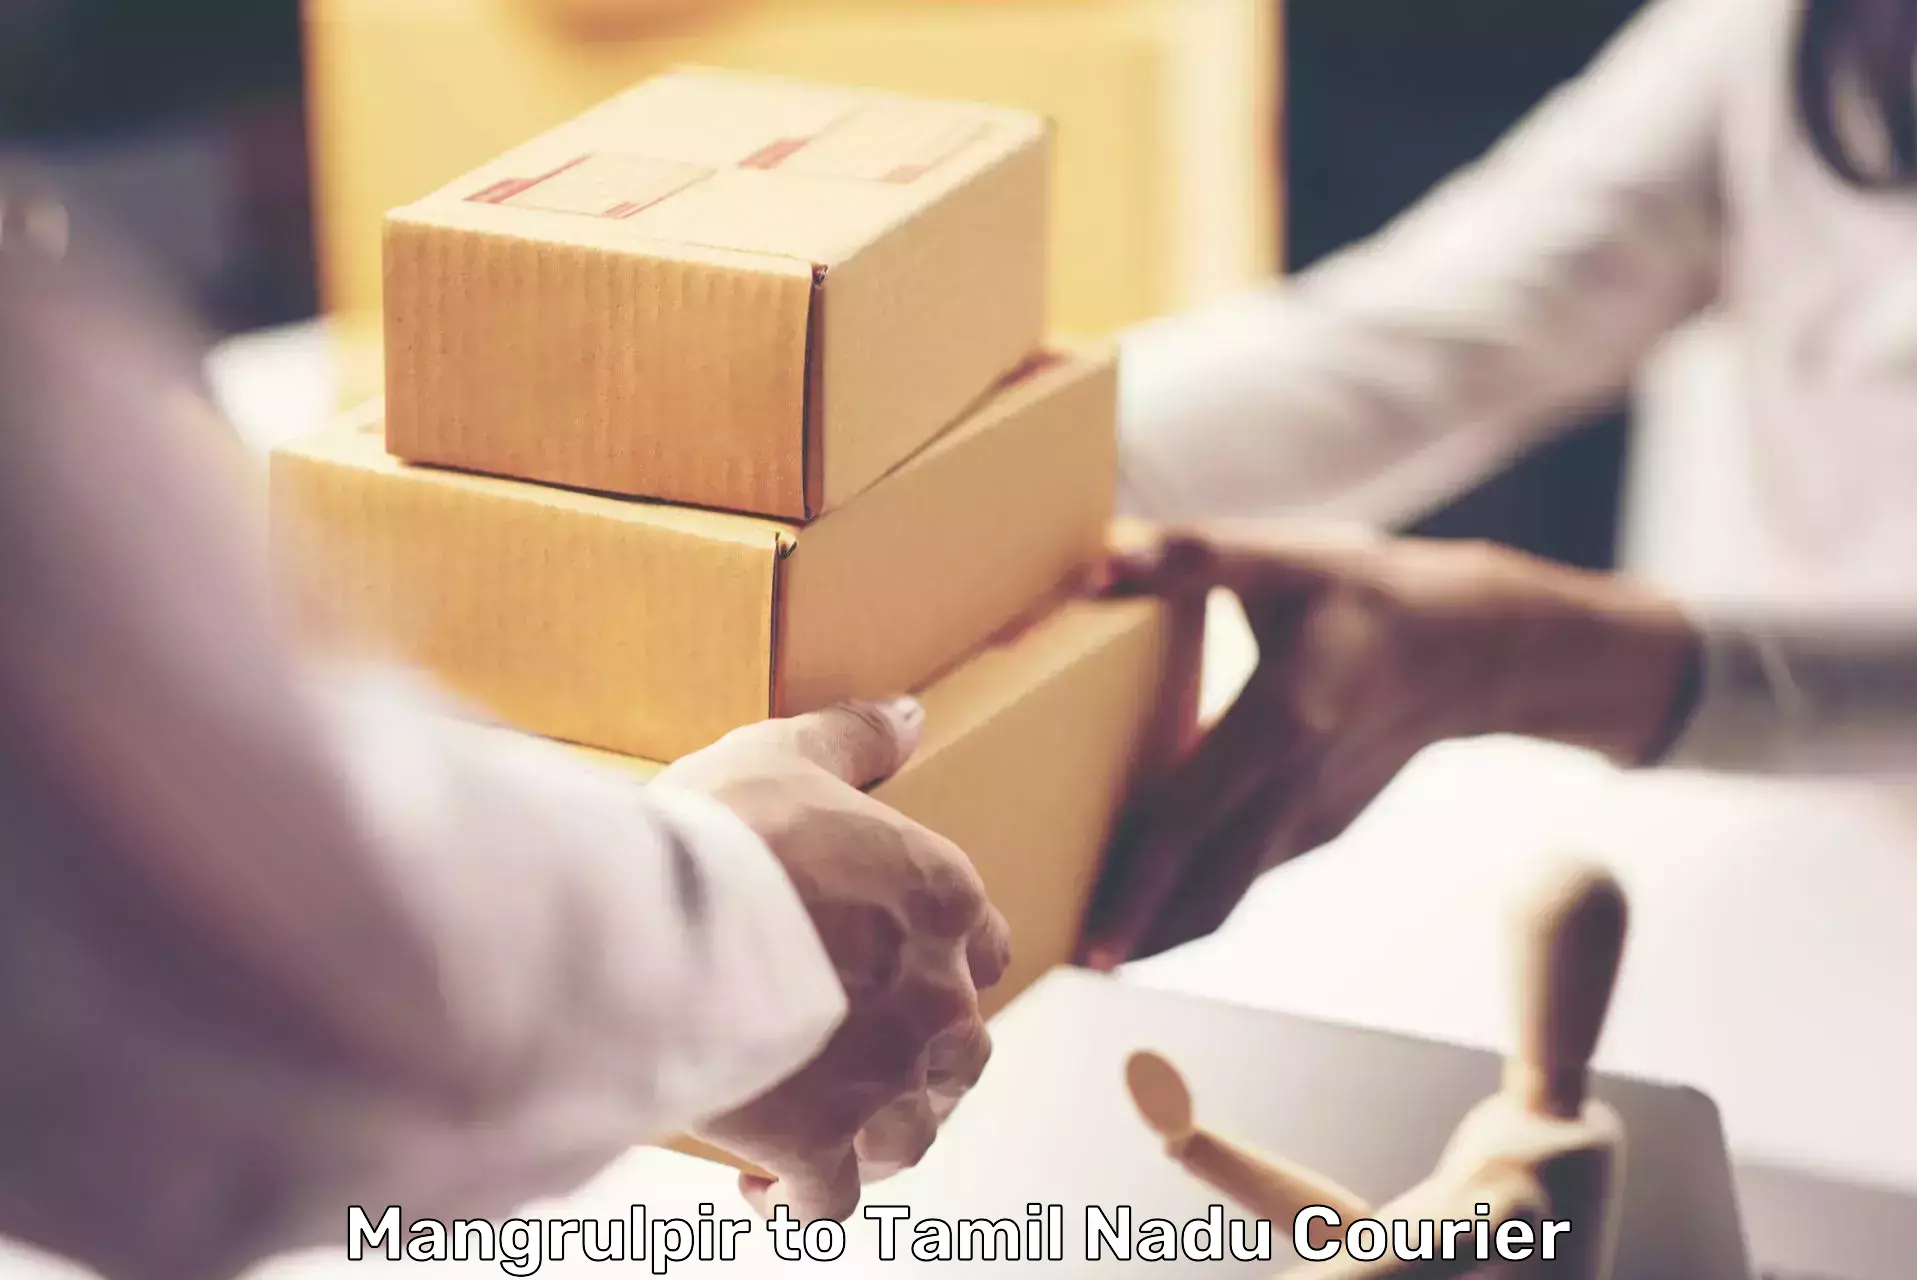 Courier service partnerships Mangrulpir to Pennagaram